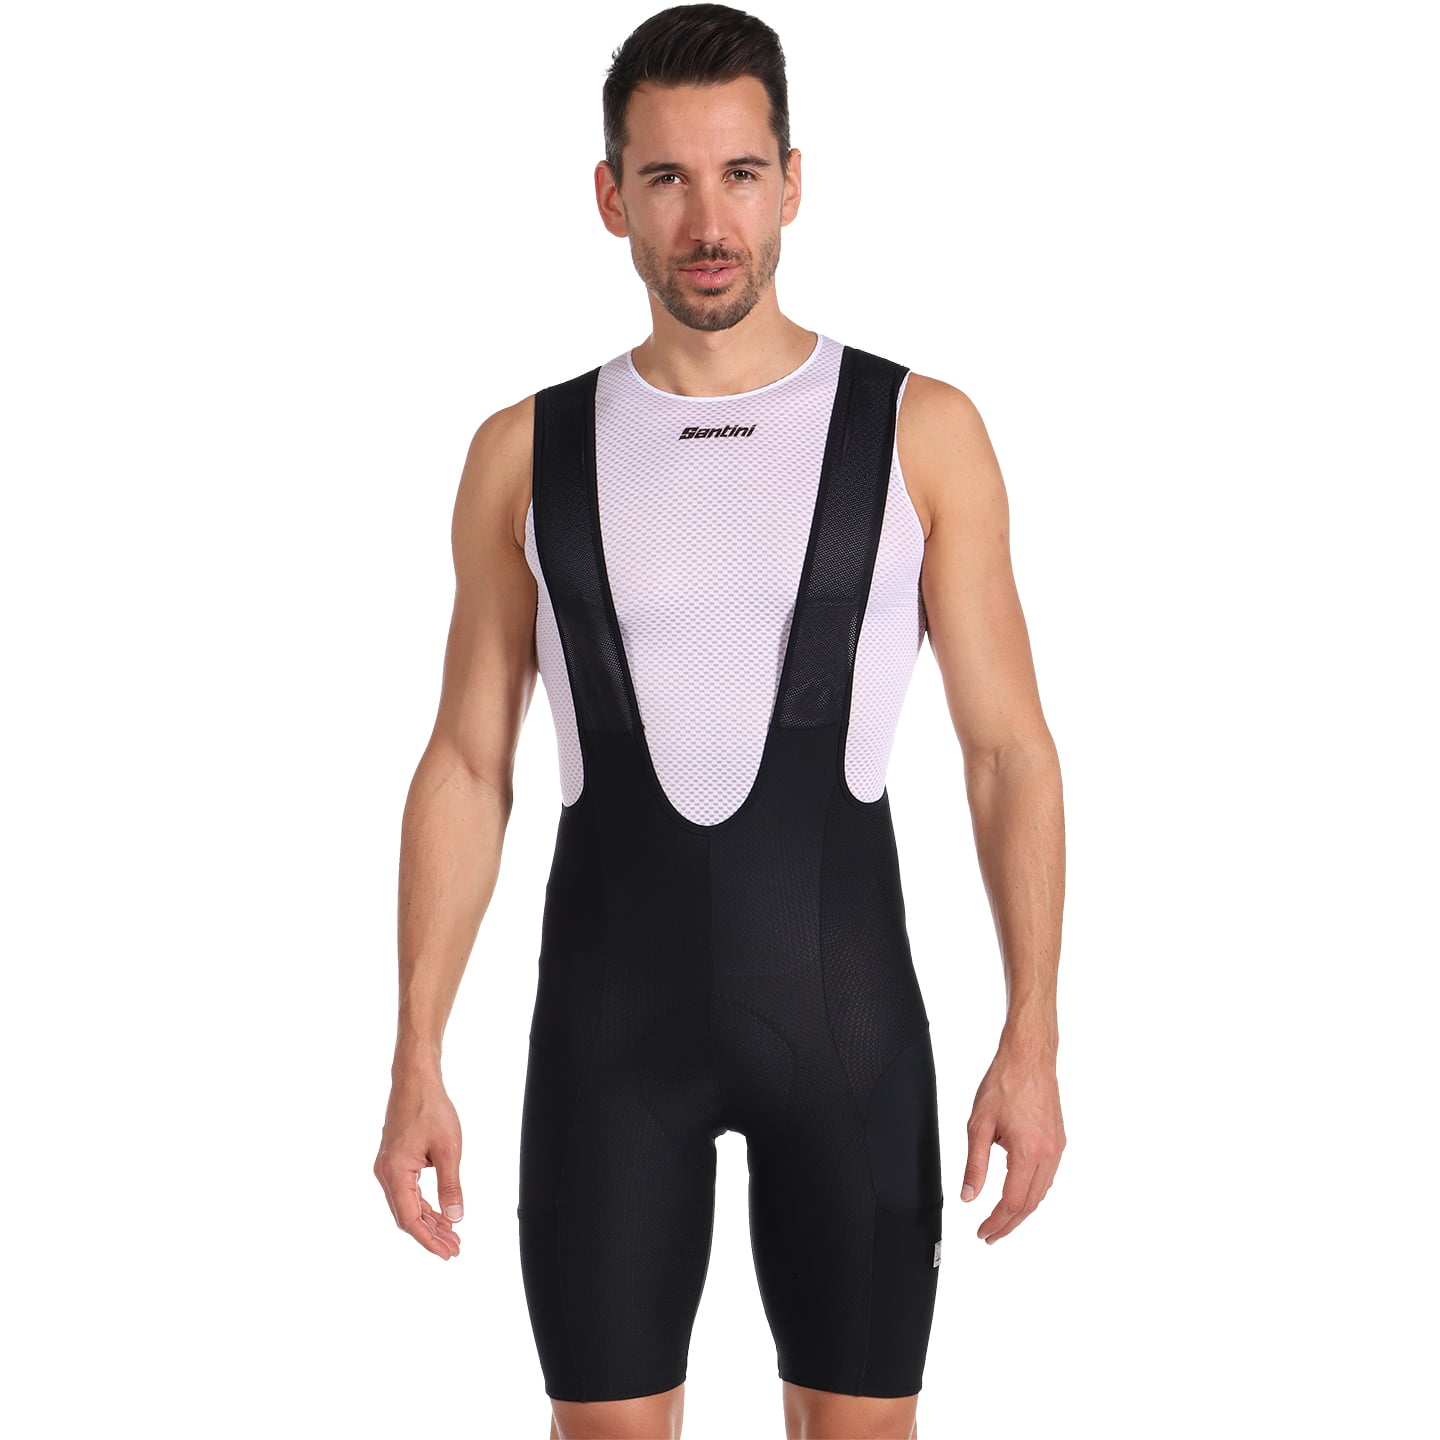 SANTINI Air Pro Gel 2 Gravel Bib Shorts Bib Shorts, for men, size XL, Cycle shorts, Cycling clothing